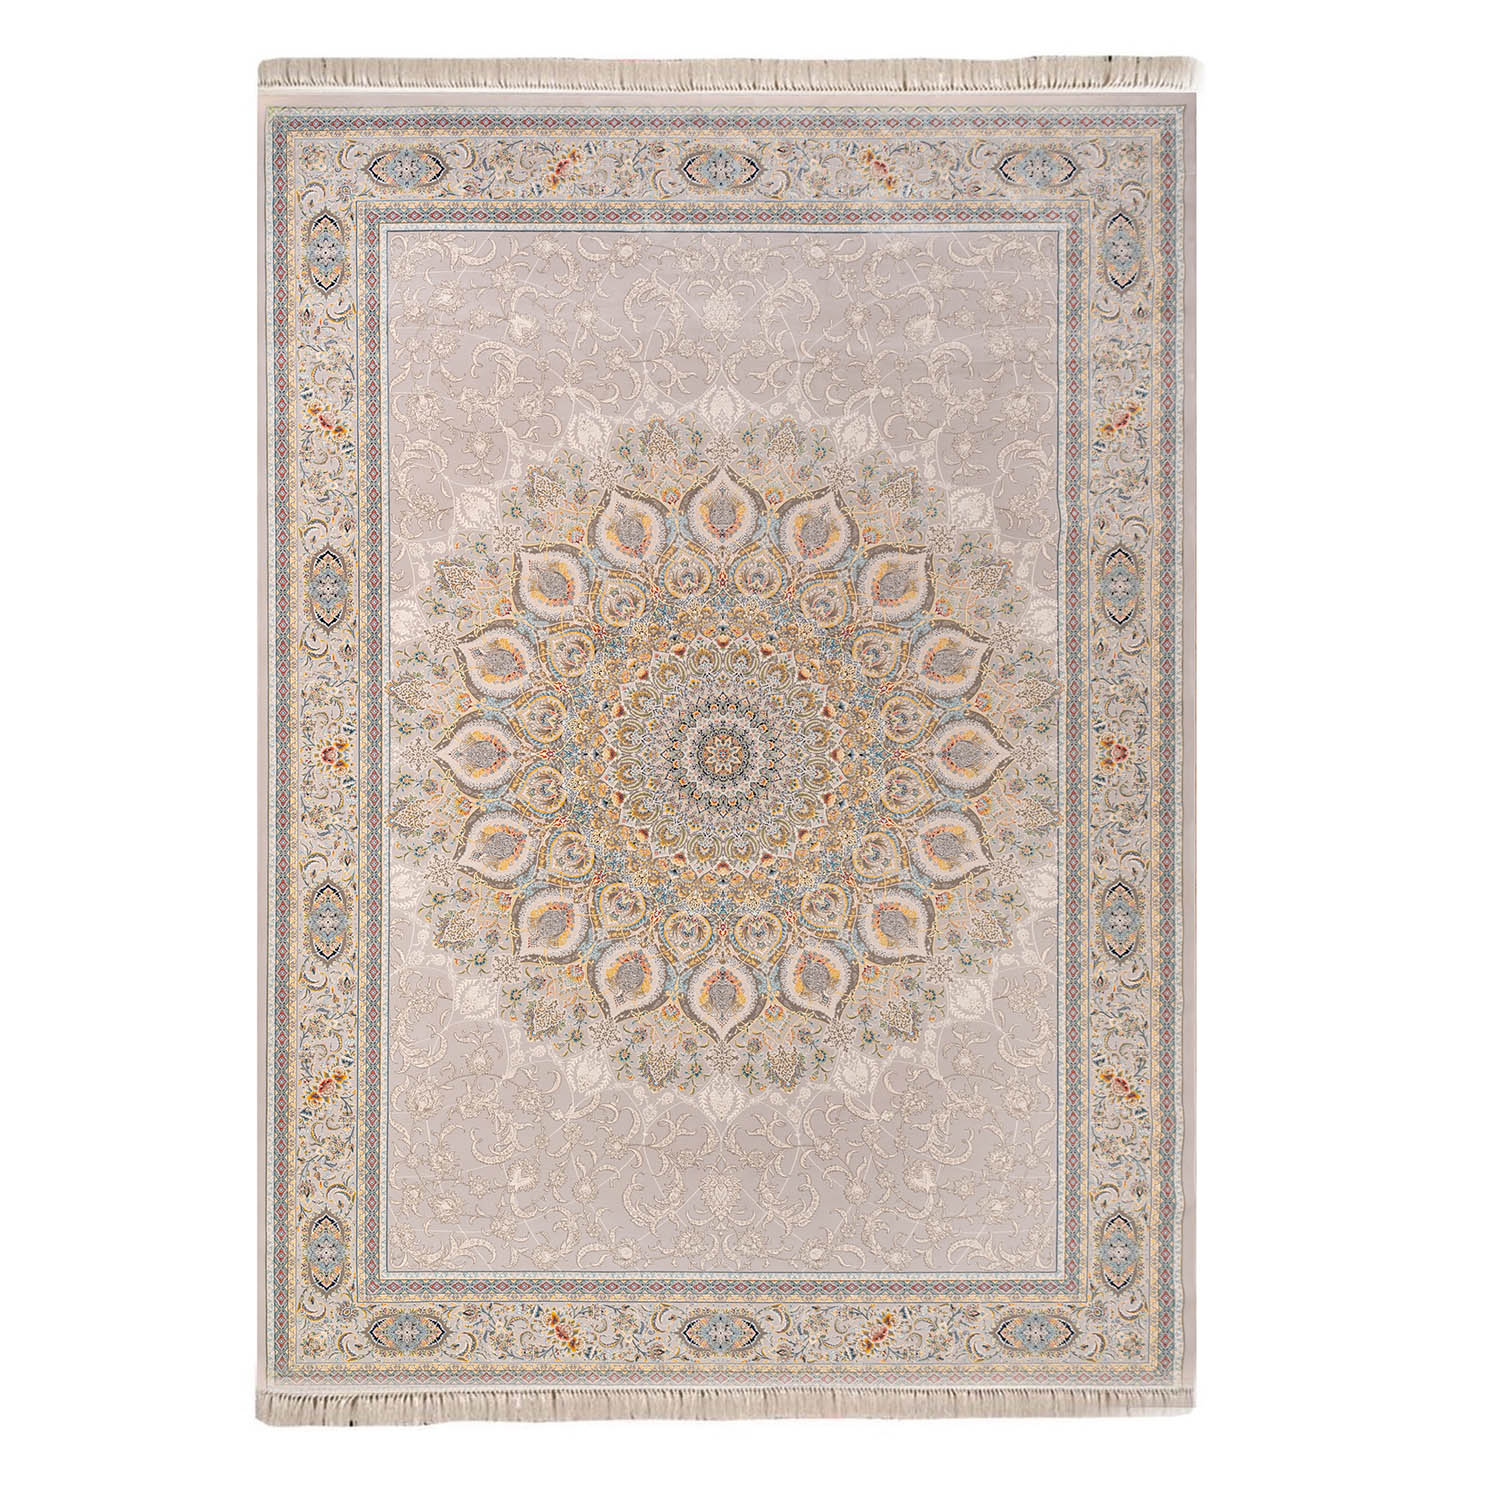 فرش ماشینی فرش الماس کویر مدل اشرافی کد 1505 زمینه نقره ای